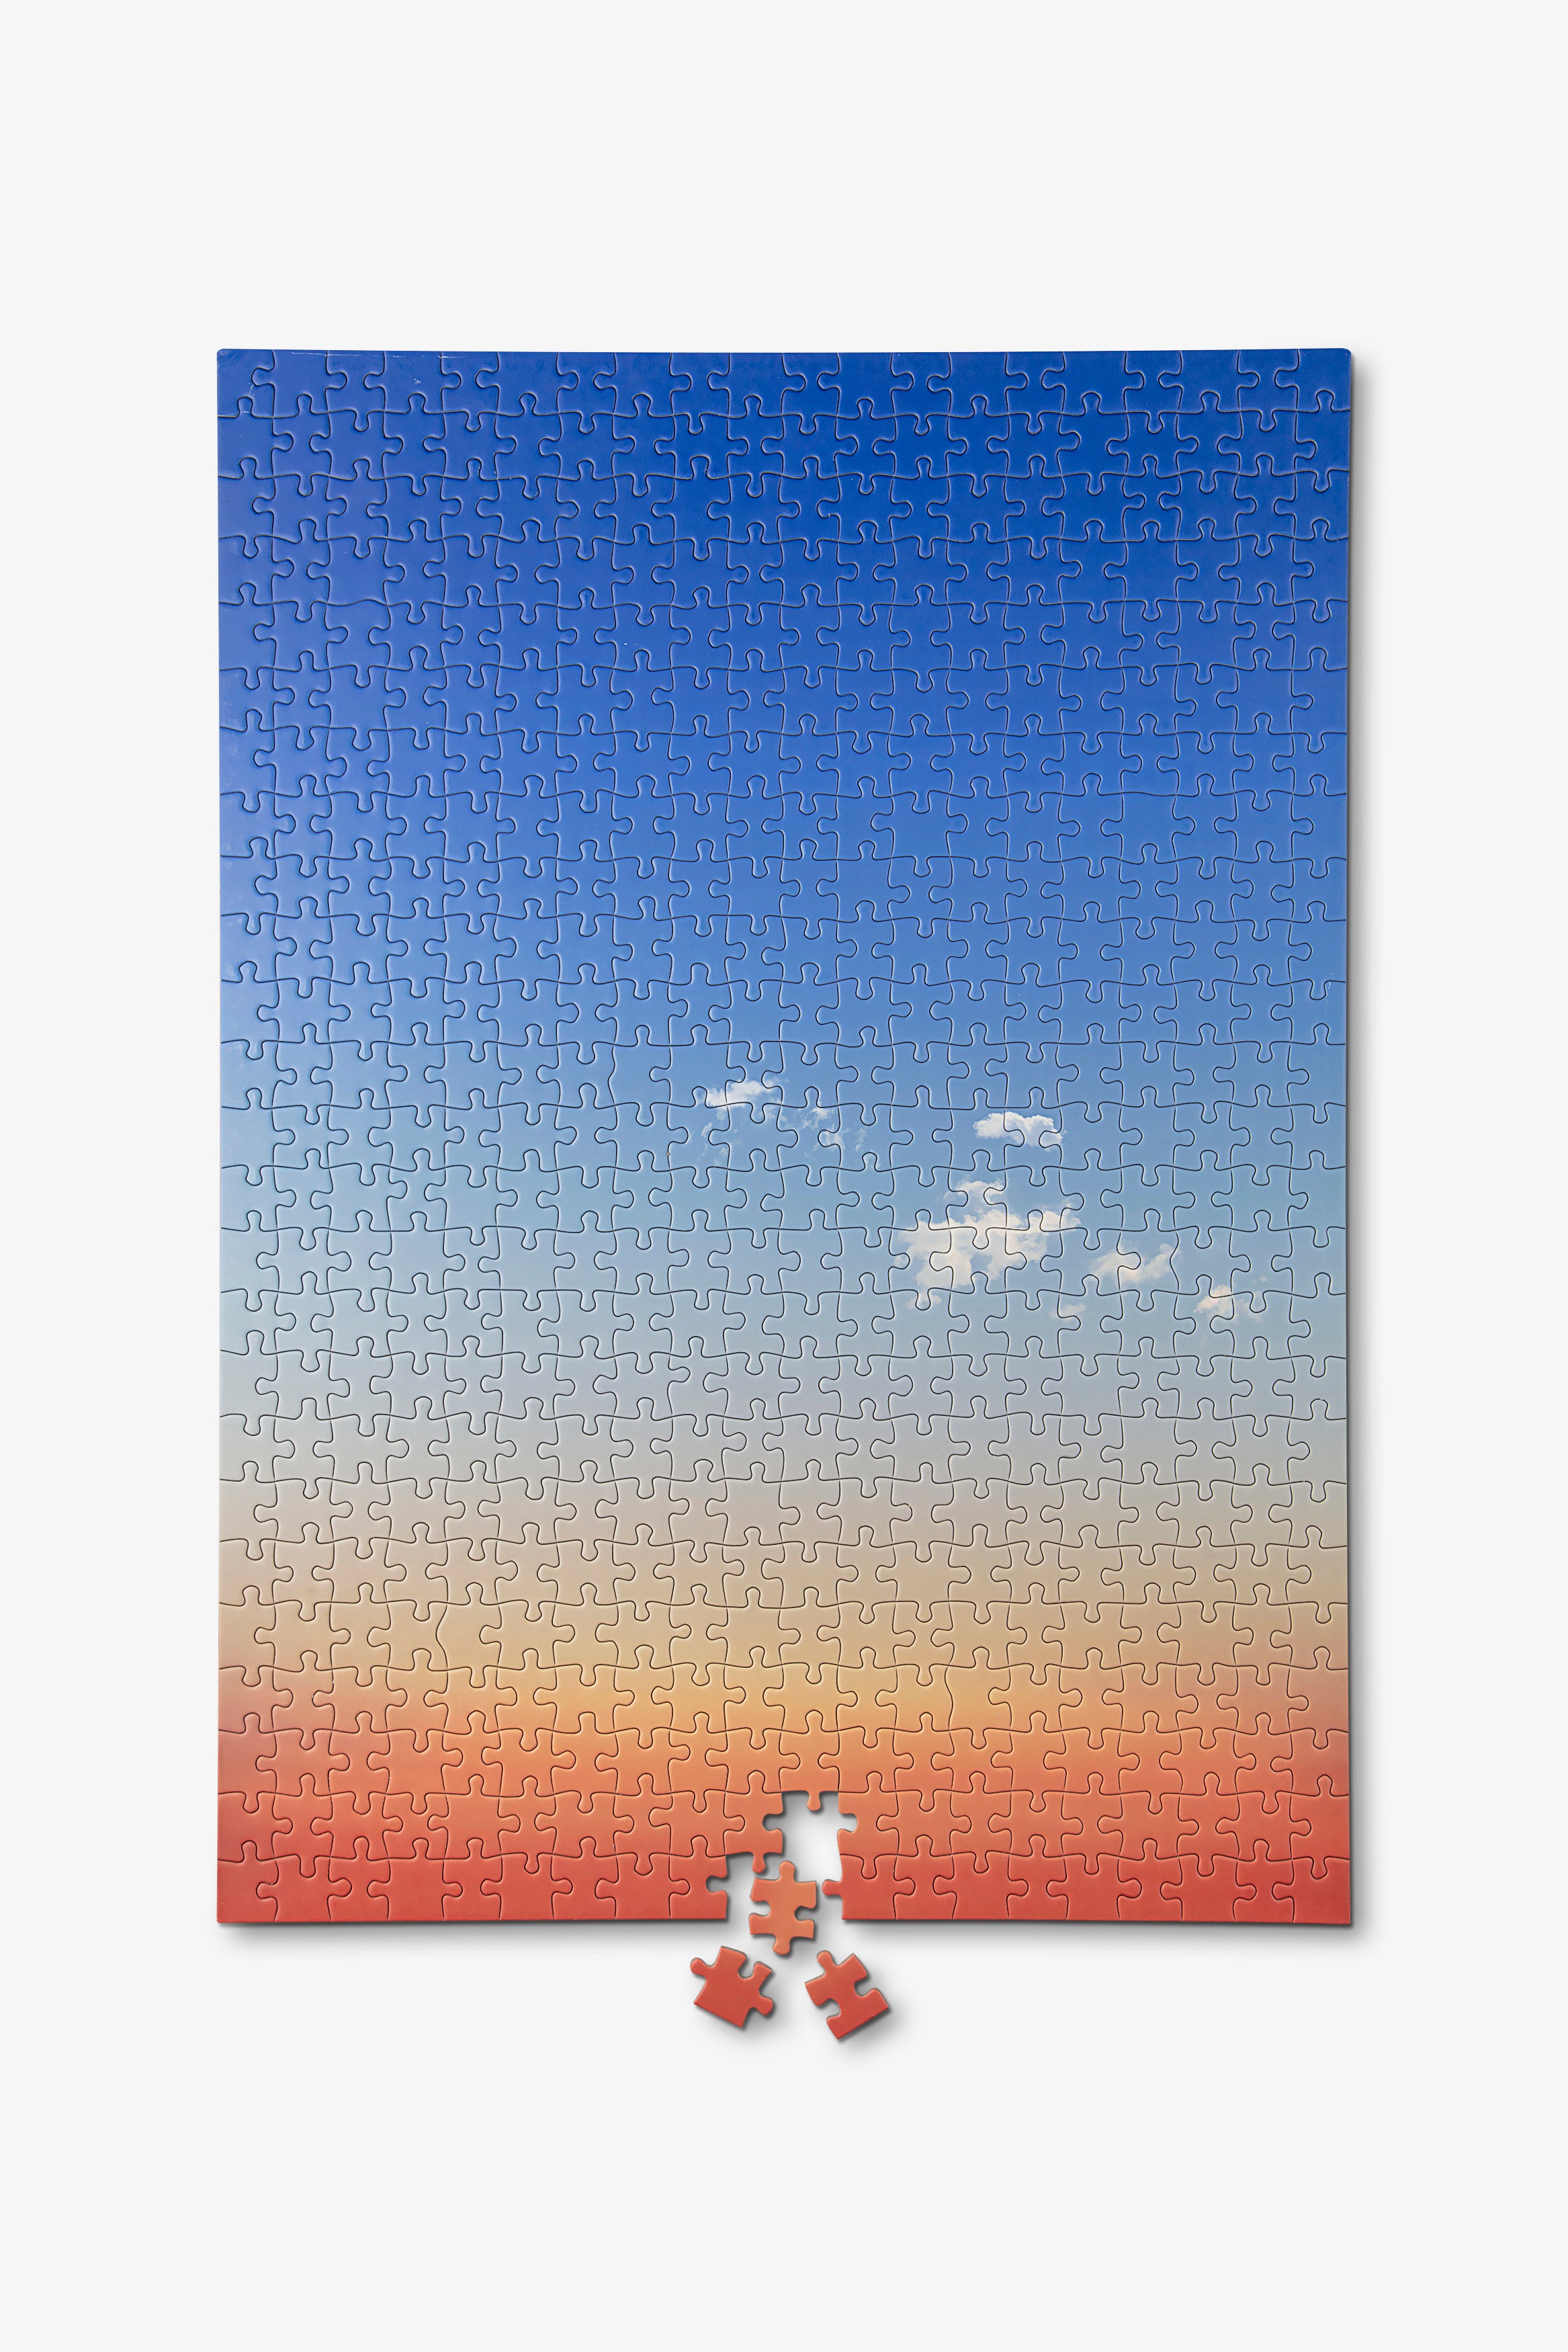 Puzzle - dusk-Printworks-[interior]-[design]-KIOSK48TH